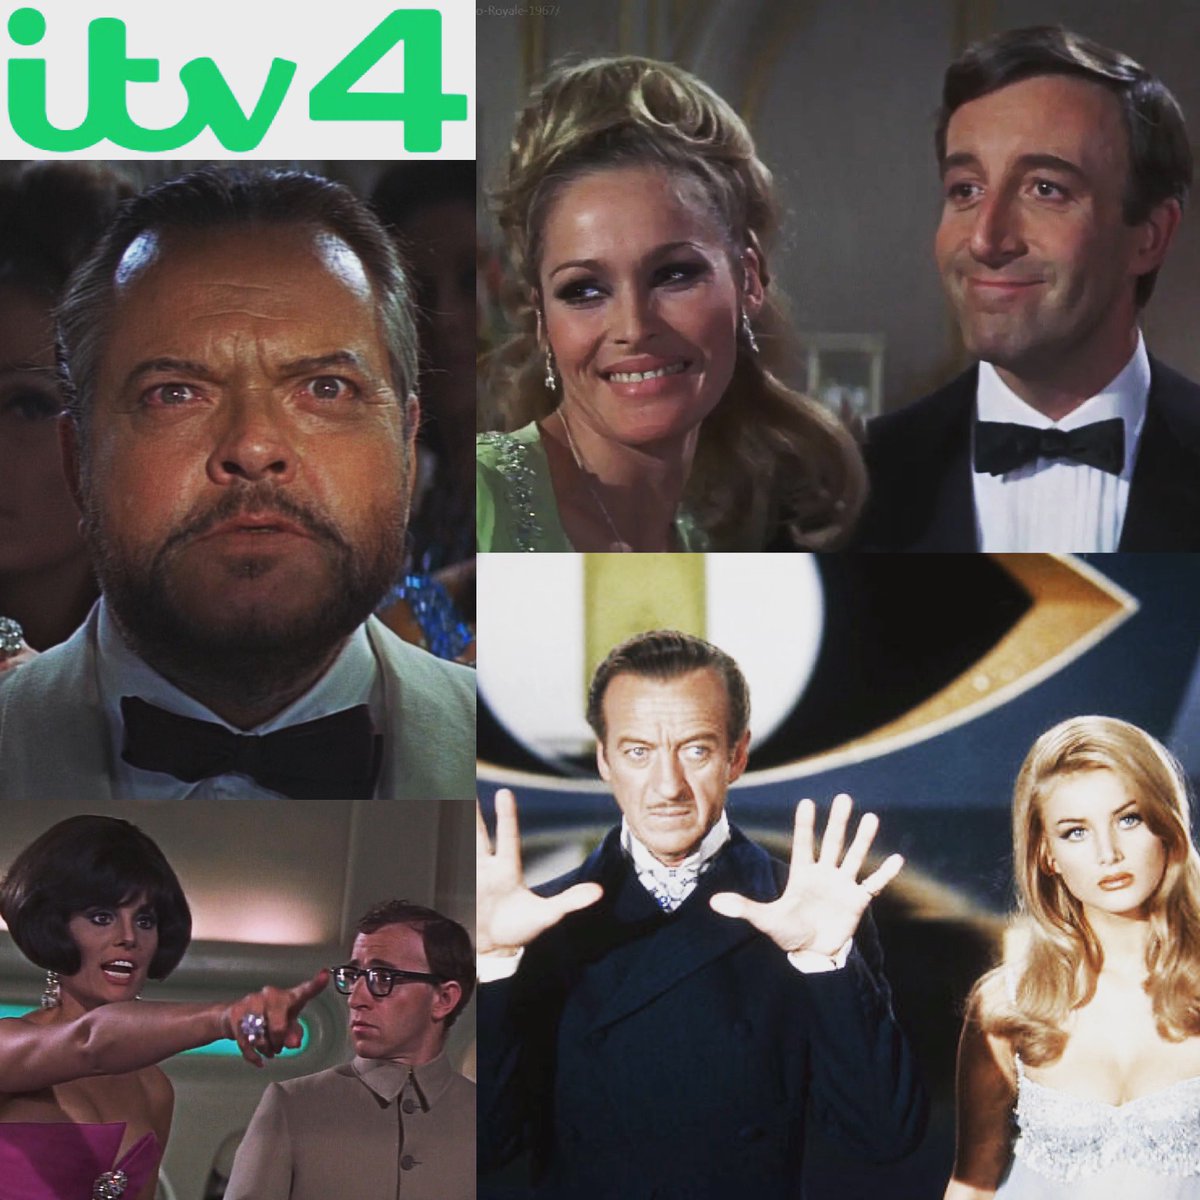 #CasinoRoyale ITV4 4.15pm

youtu.be/TJM2D-tx2z8